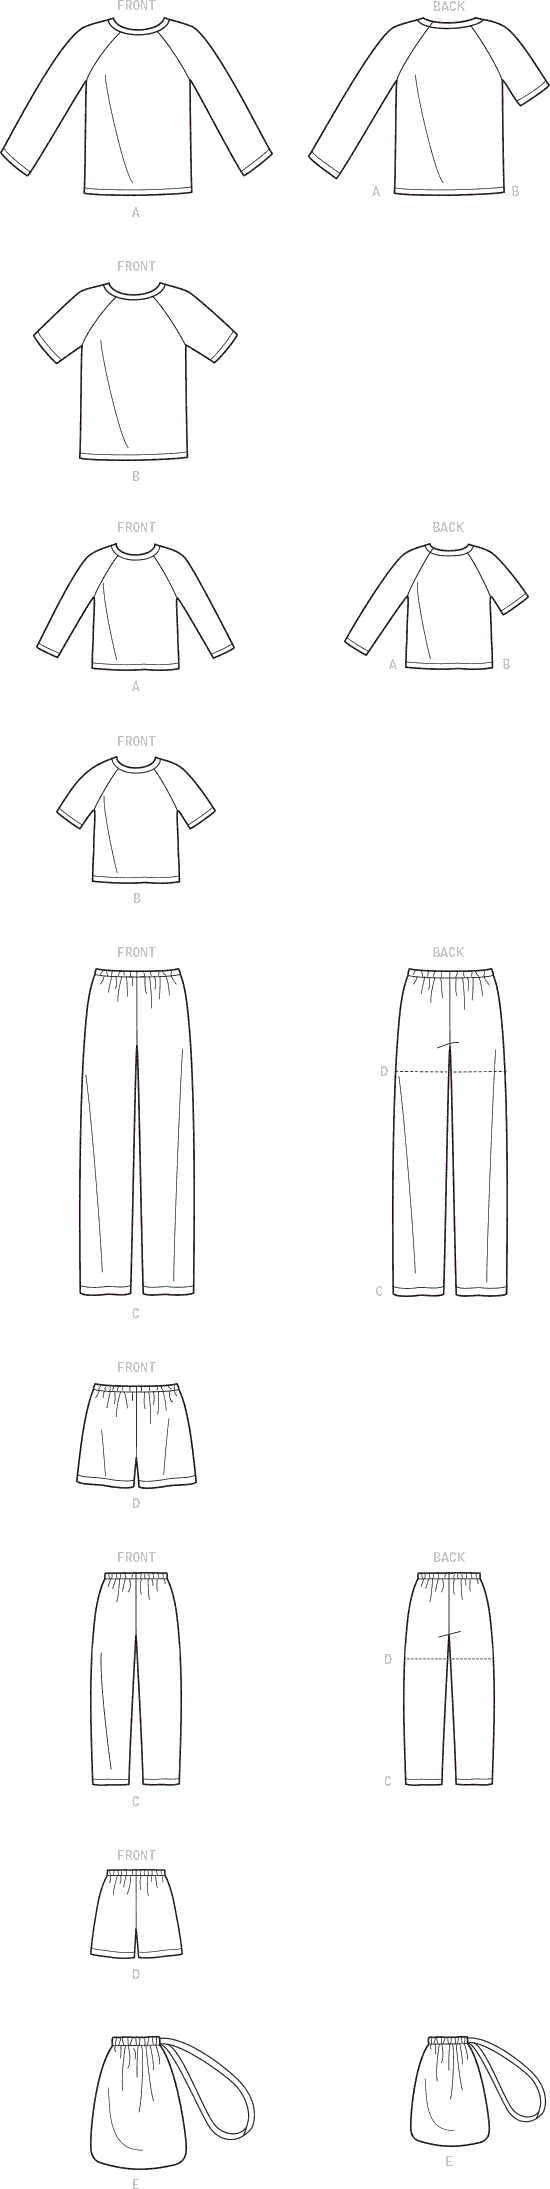 Simplicity Sewing Pattern S9128 Mens and Boys Sleepwear 9128 Line Art From Patternsandplains.com